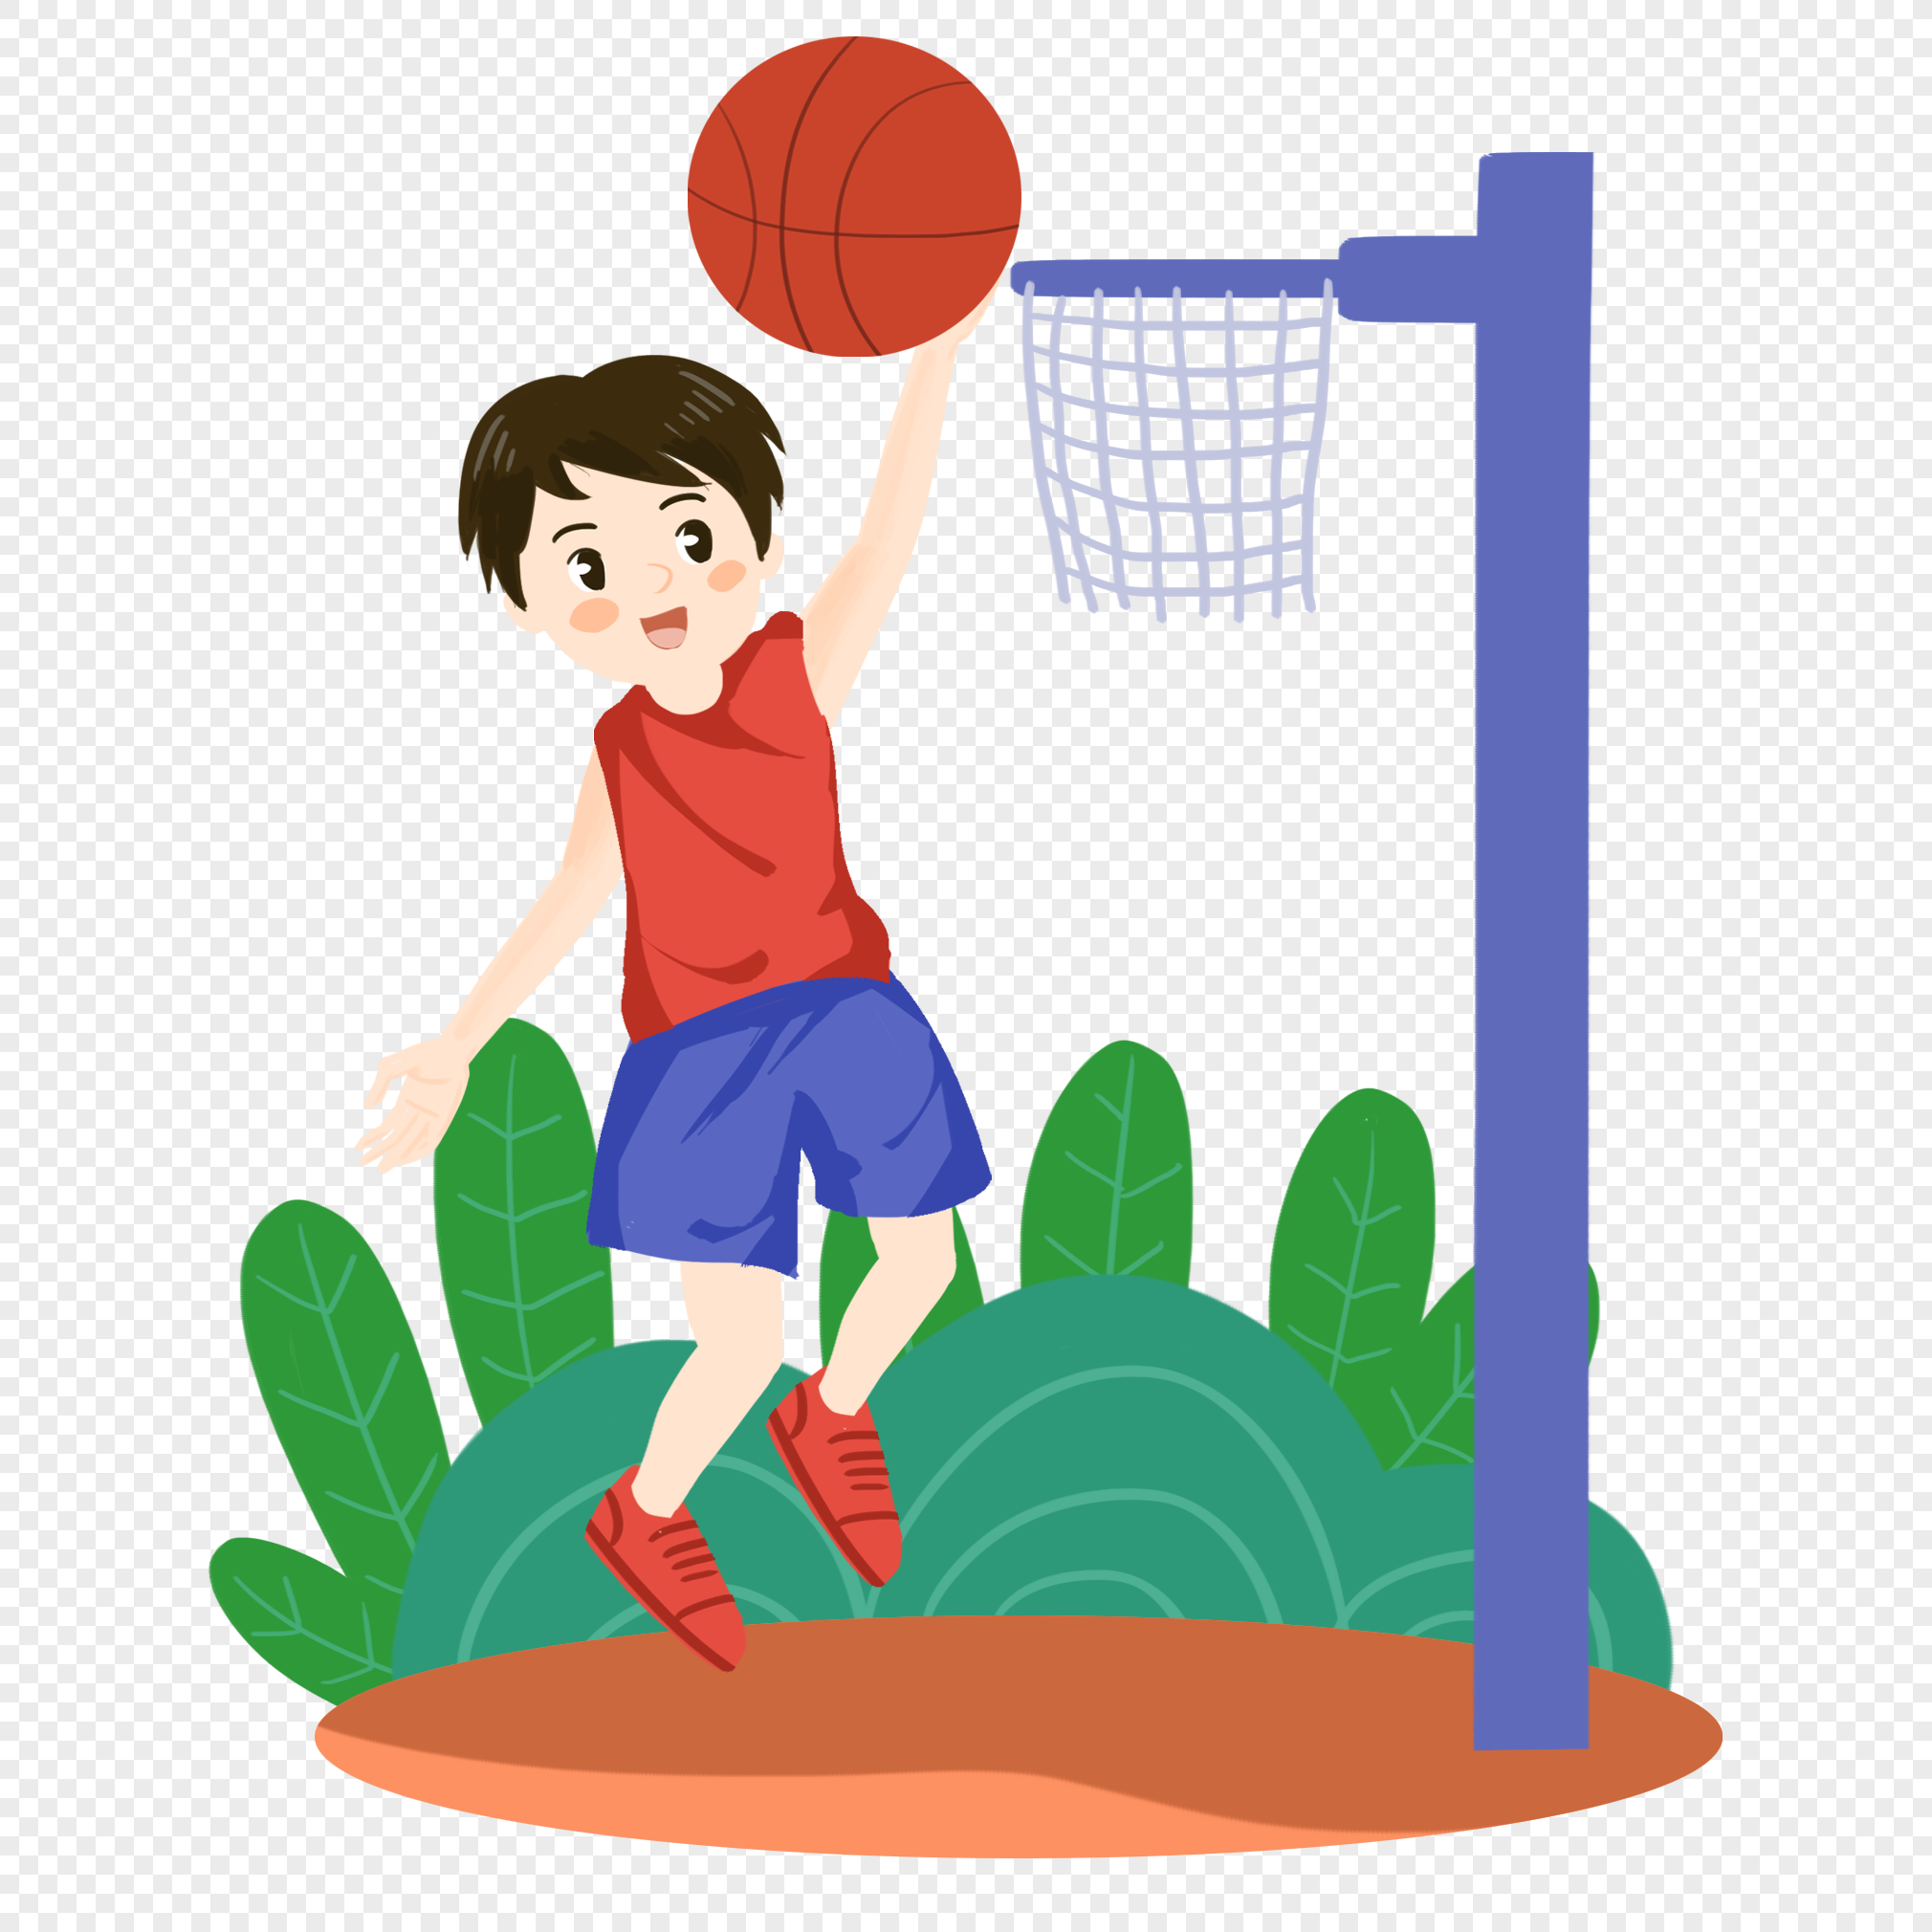 Boy Playing Basketball PNG Image 